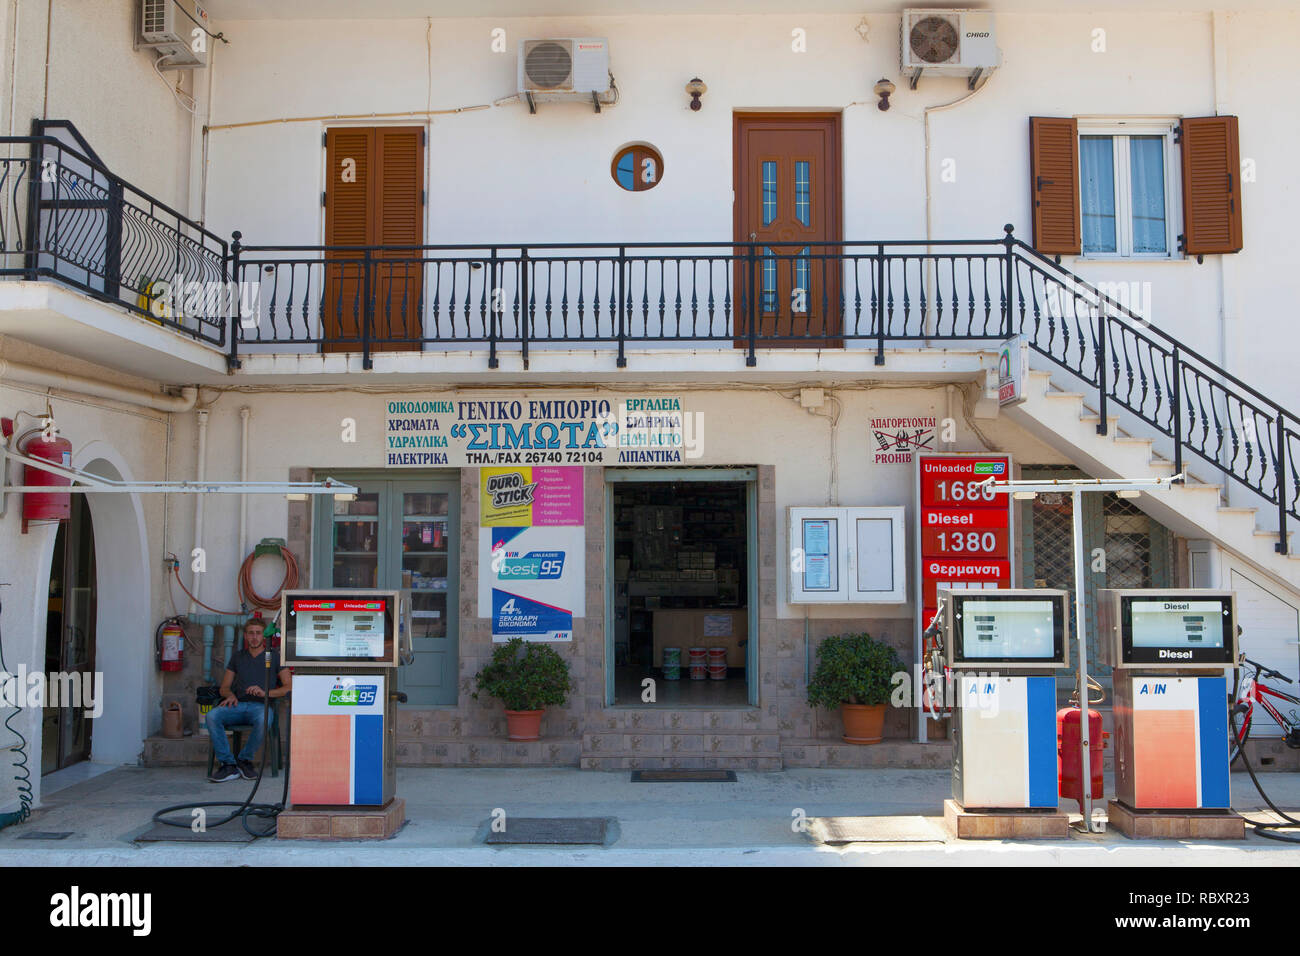 Garage in Argostoli, with attendant, Kefalonia, Greece. Stock Photo